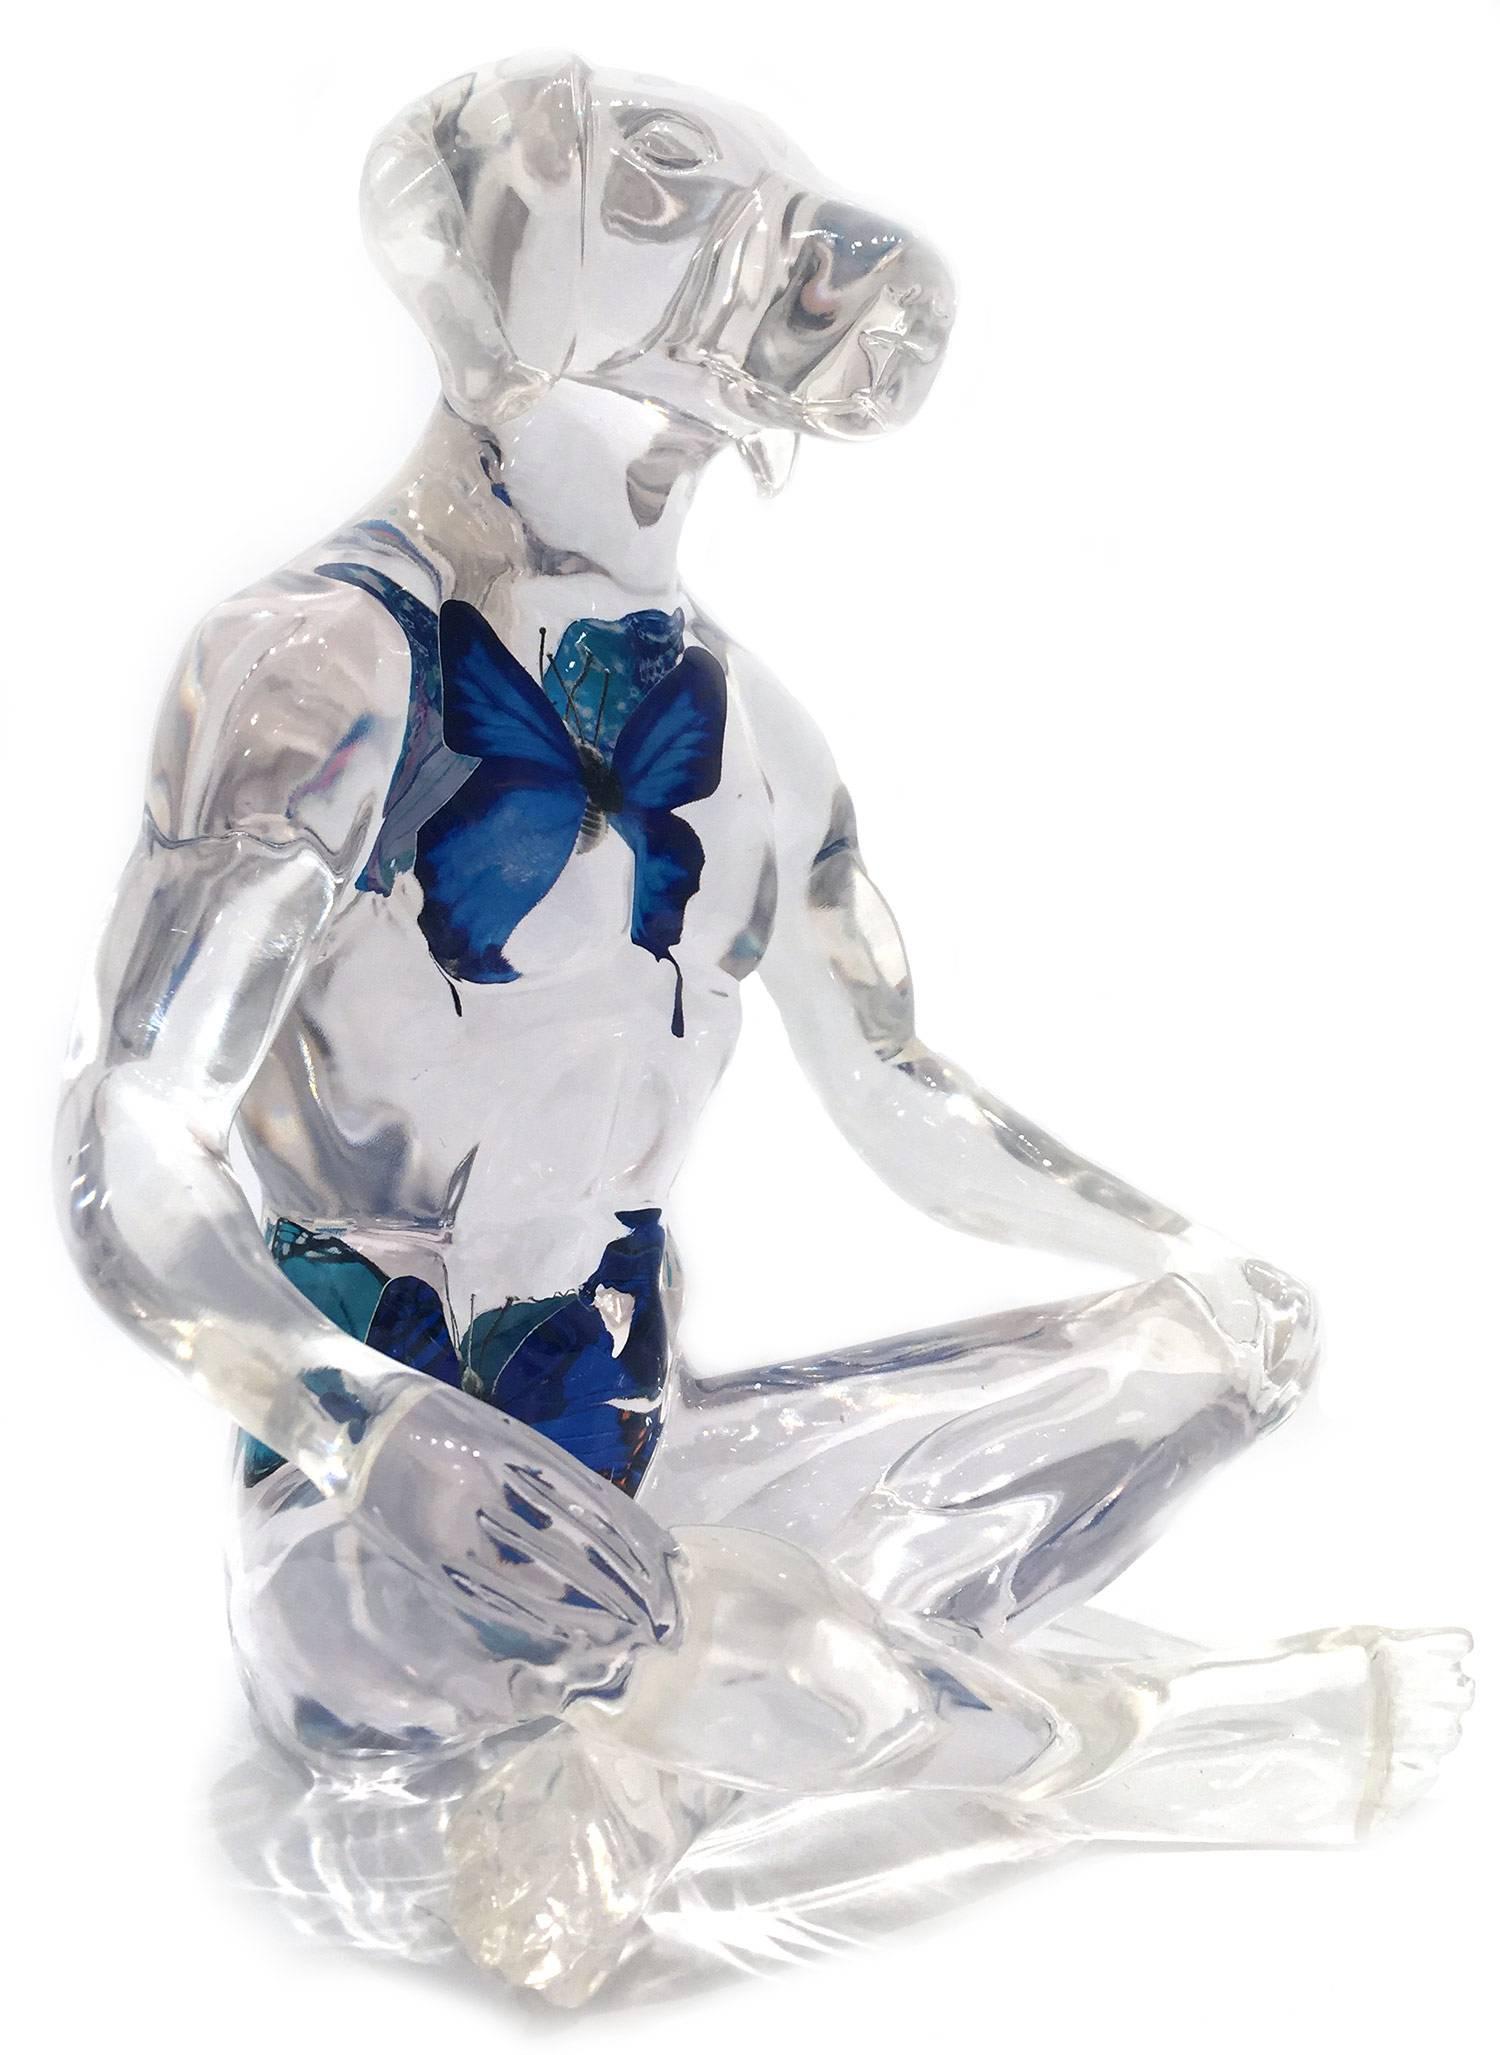 Gillie and Marc Schattner Abstract Sculpture - Butterfly Blue Dogman